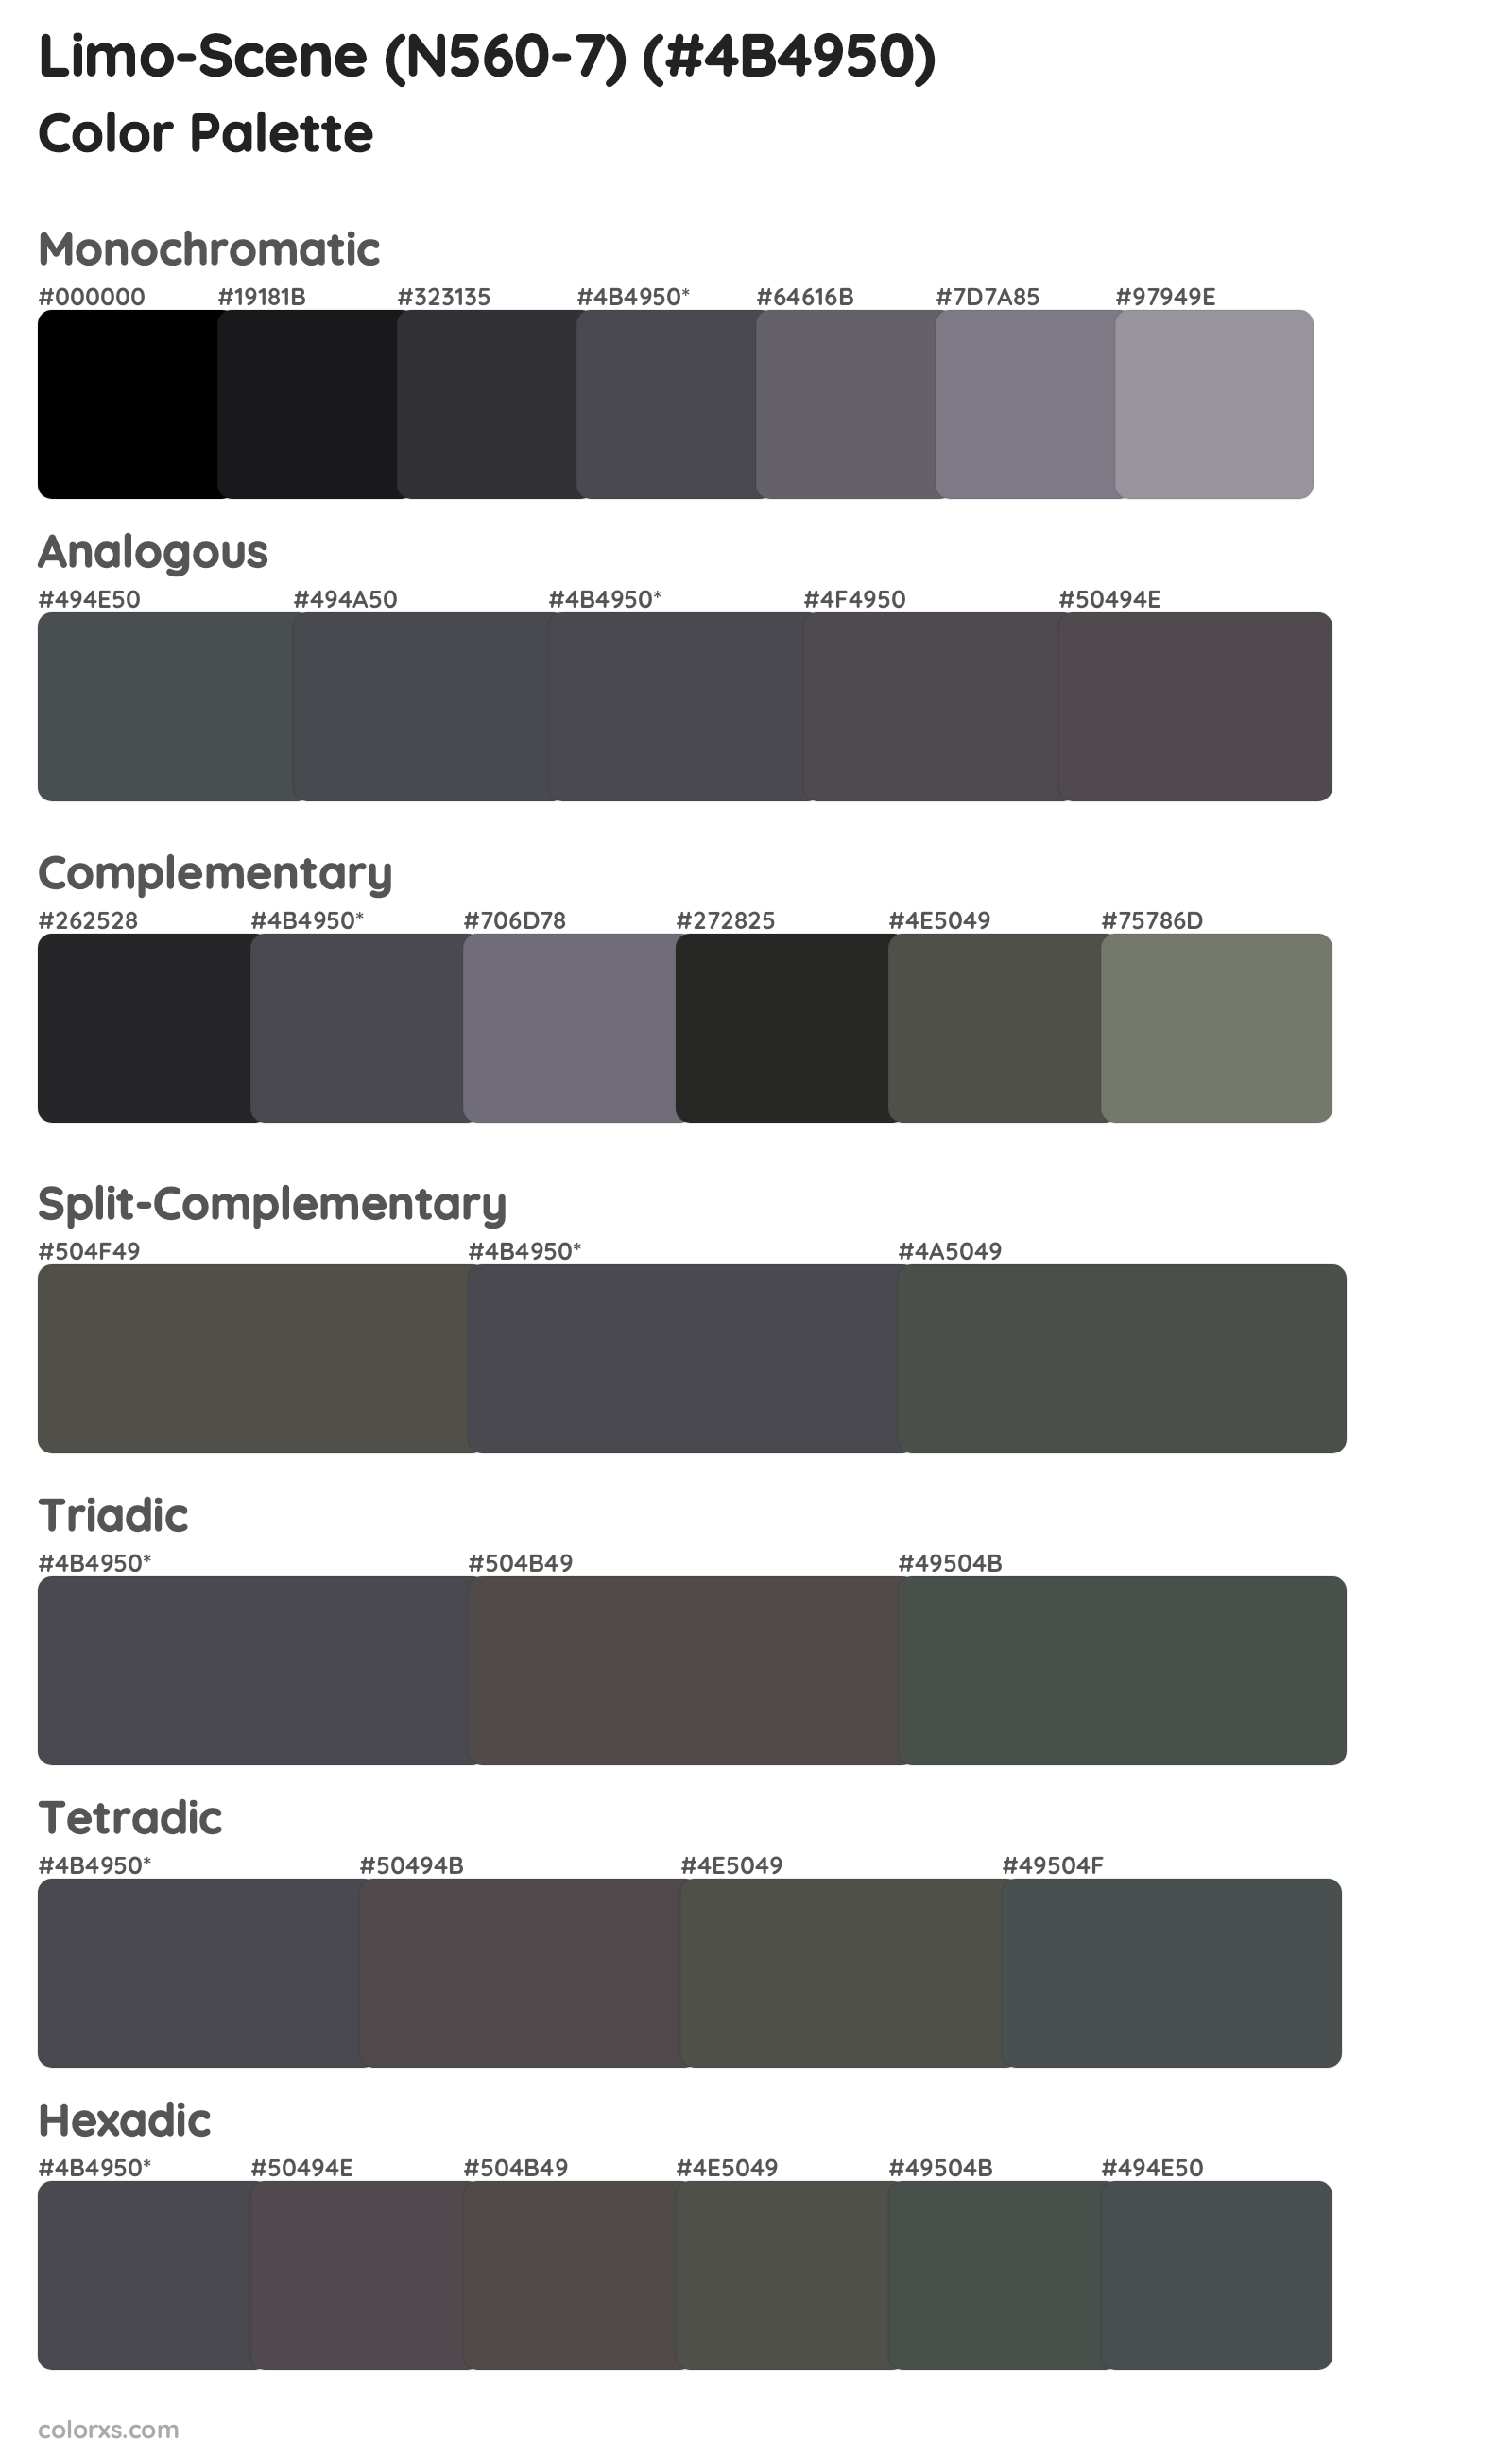 Limo-Scene (N560-7) Color Scheme Palettes